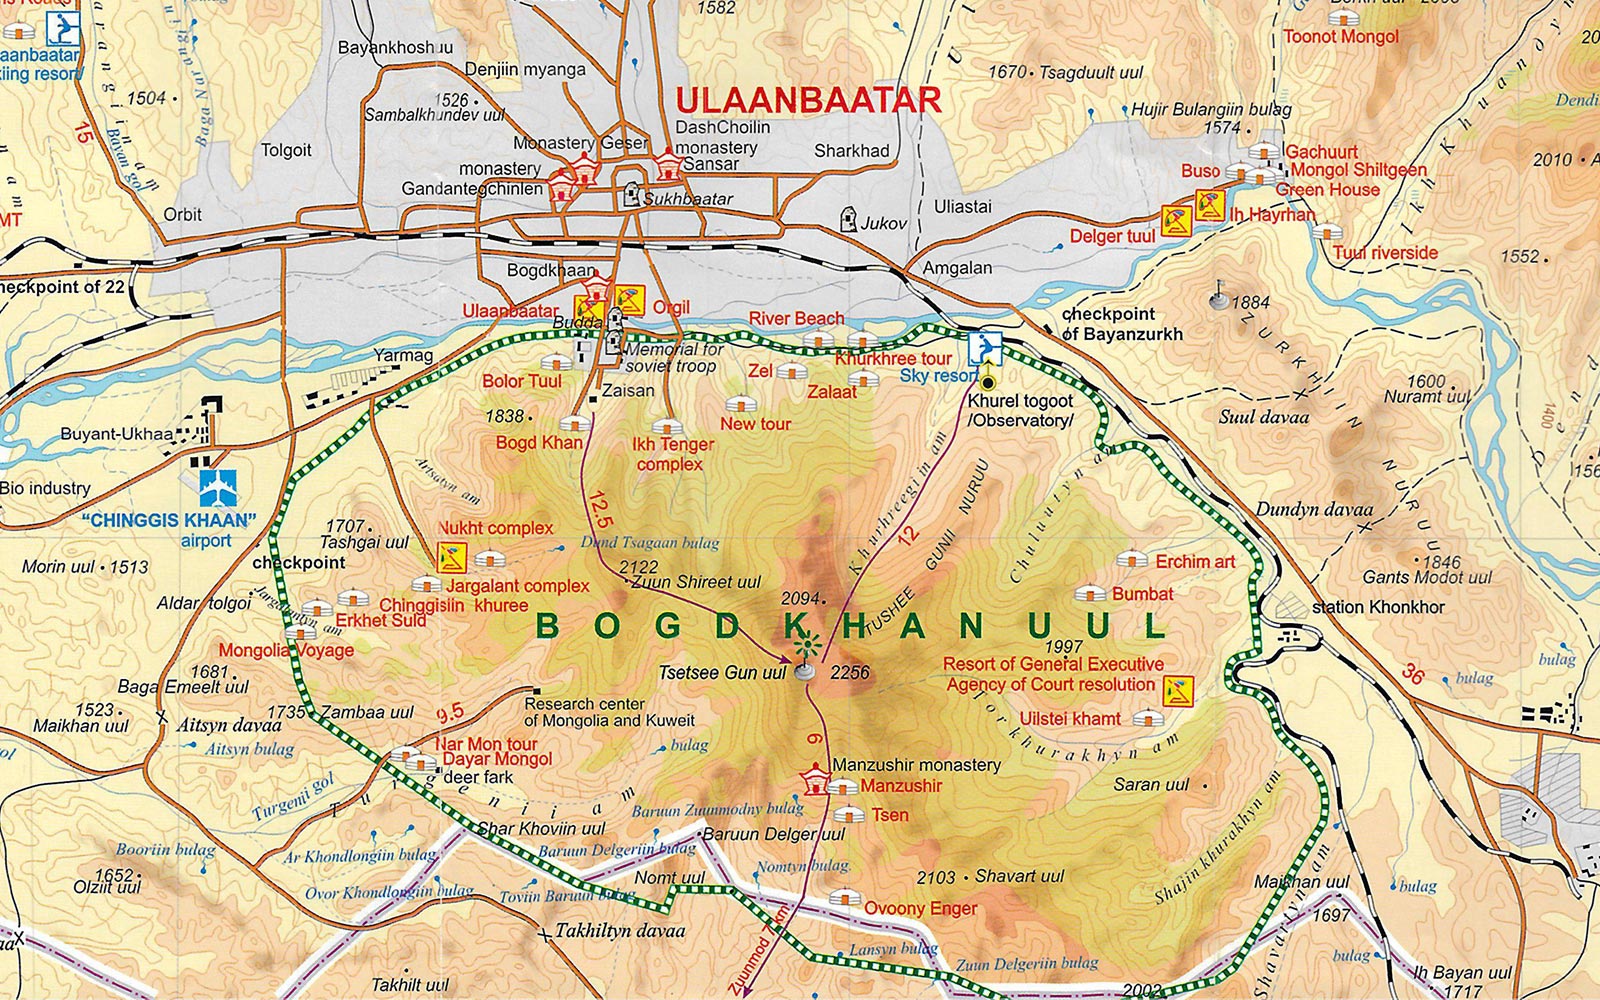 Photo. Bogdkhan uul National Park map. Map of Mongolia.